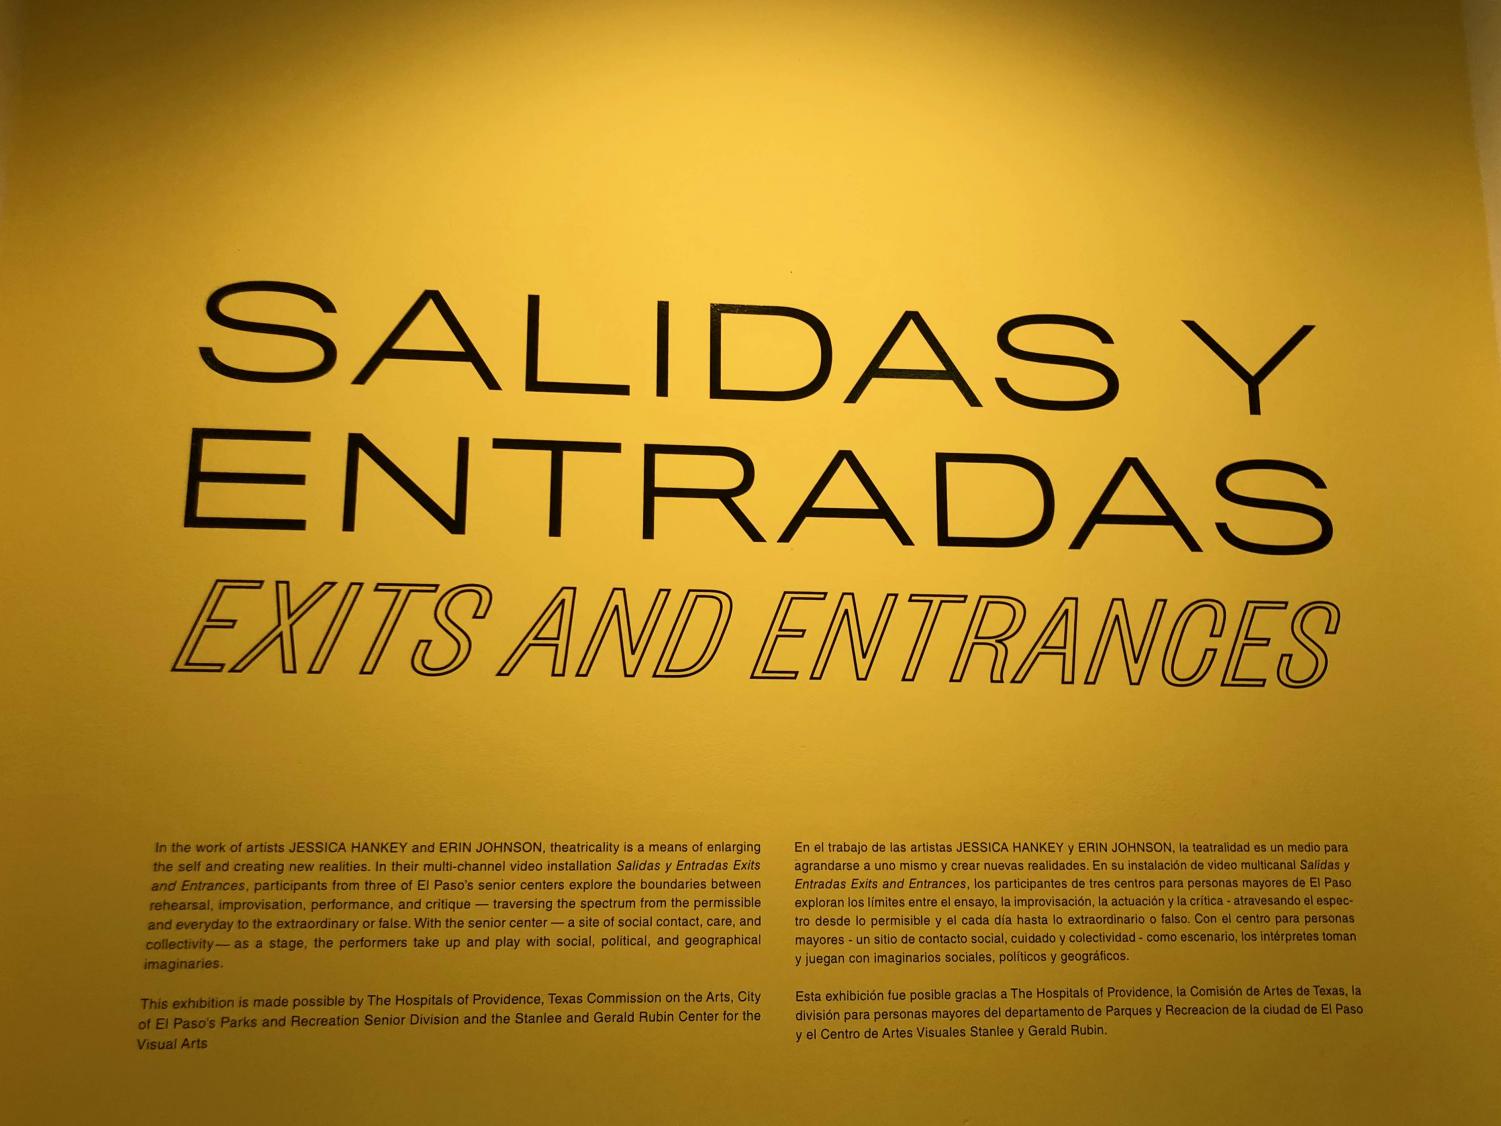 Salidas+Y+Entradas%3A+Exists+and+Entrances+Exhibition+opens+at+the+Rubin+Center